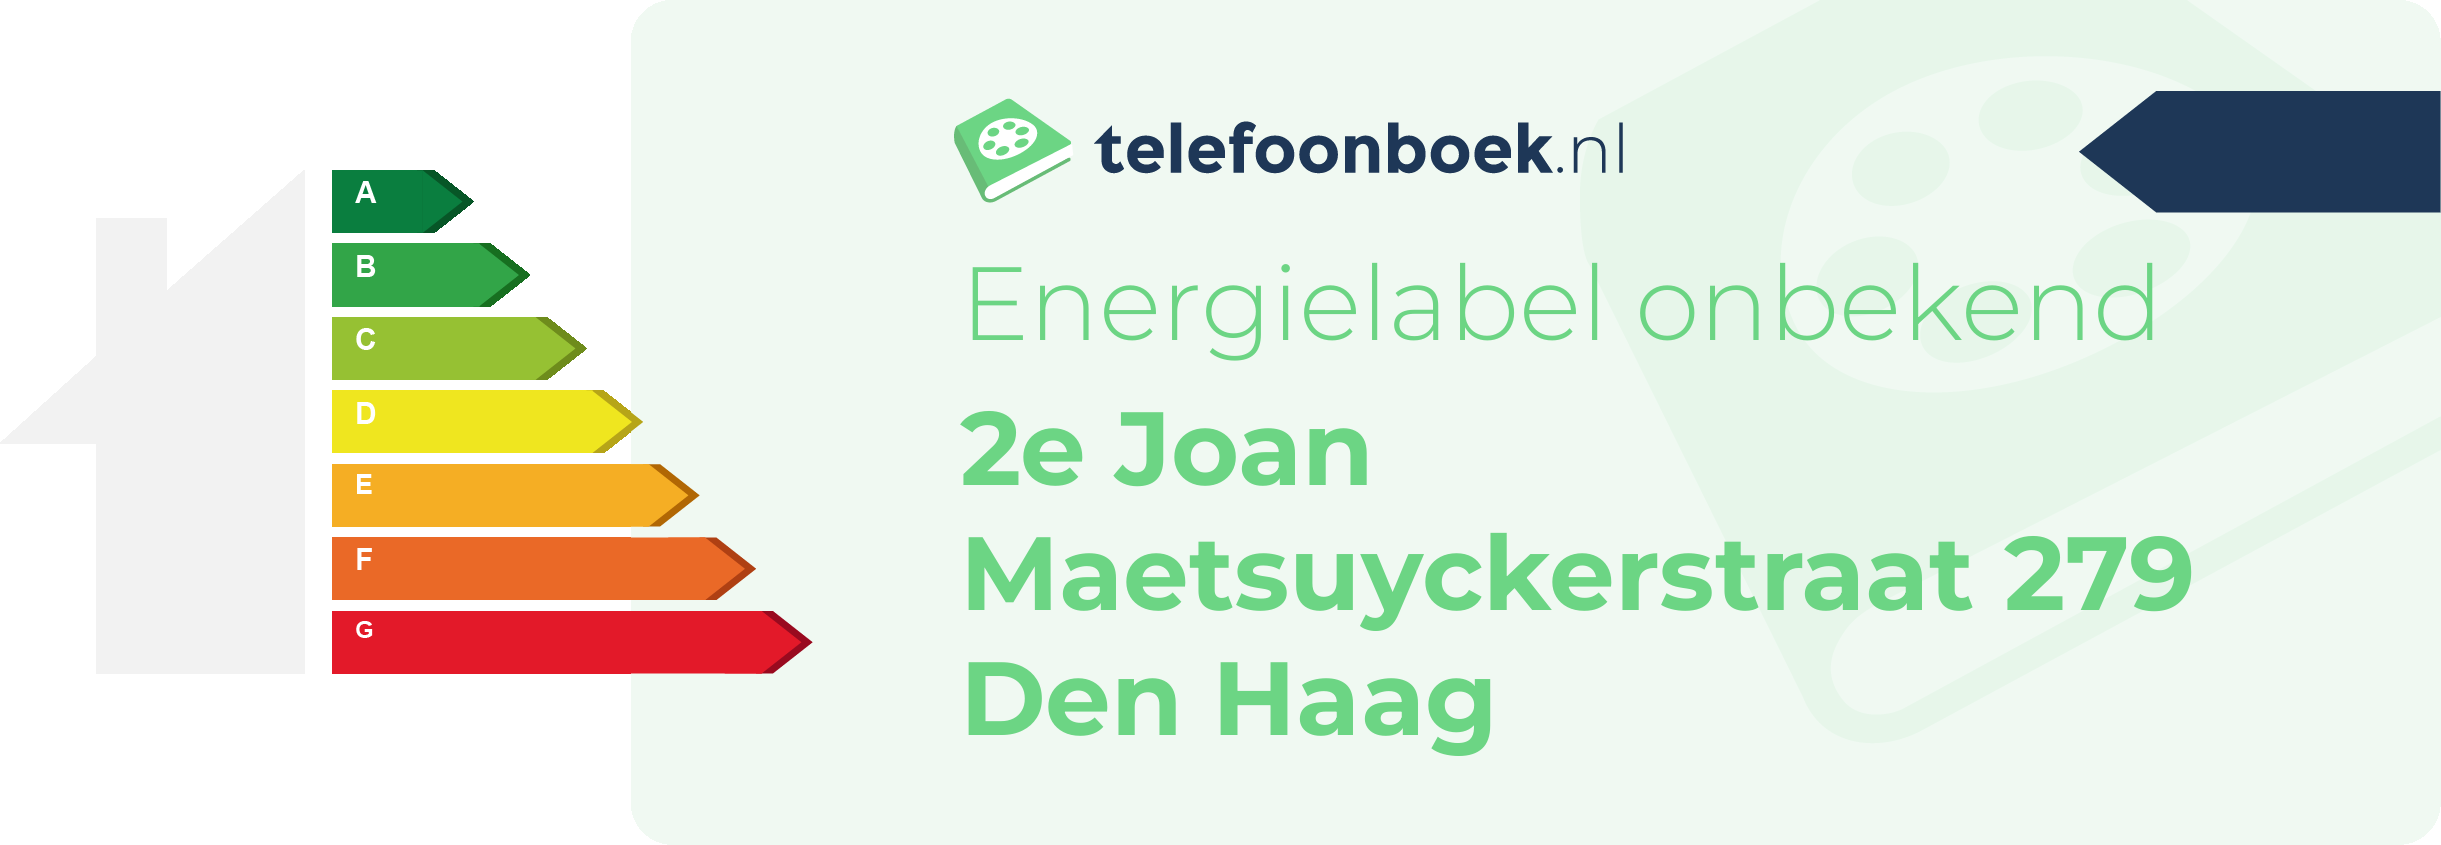 Energielabel 2e Joan Maetsuyckerstraat 279 Den Haag